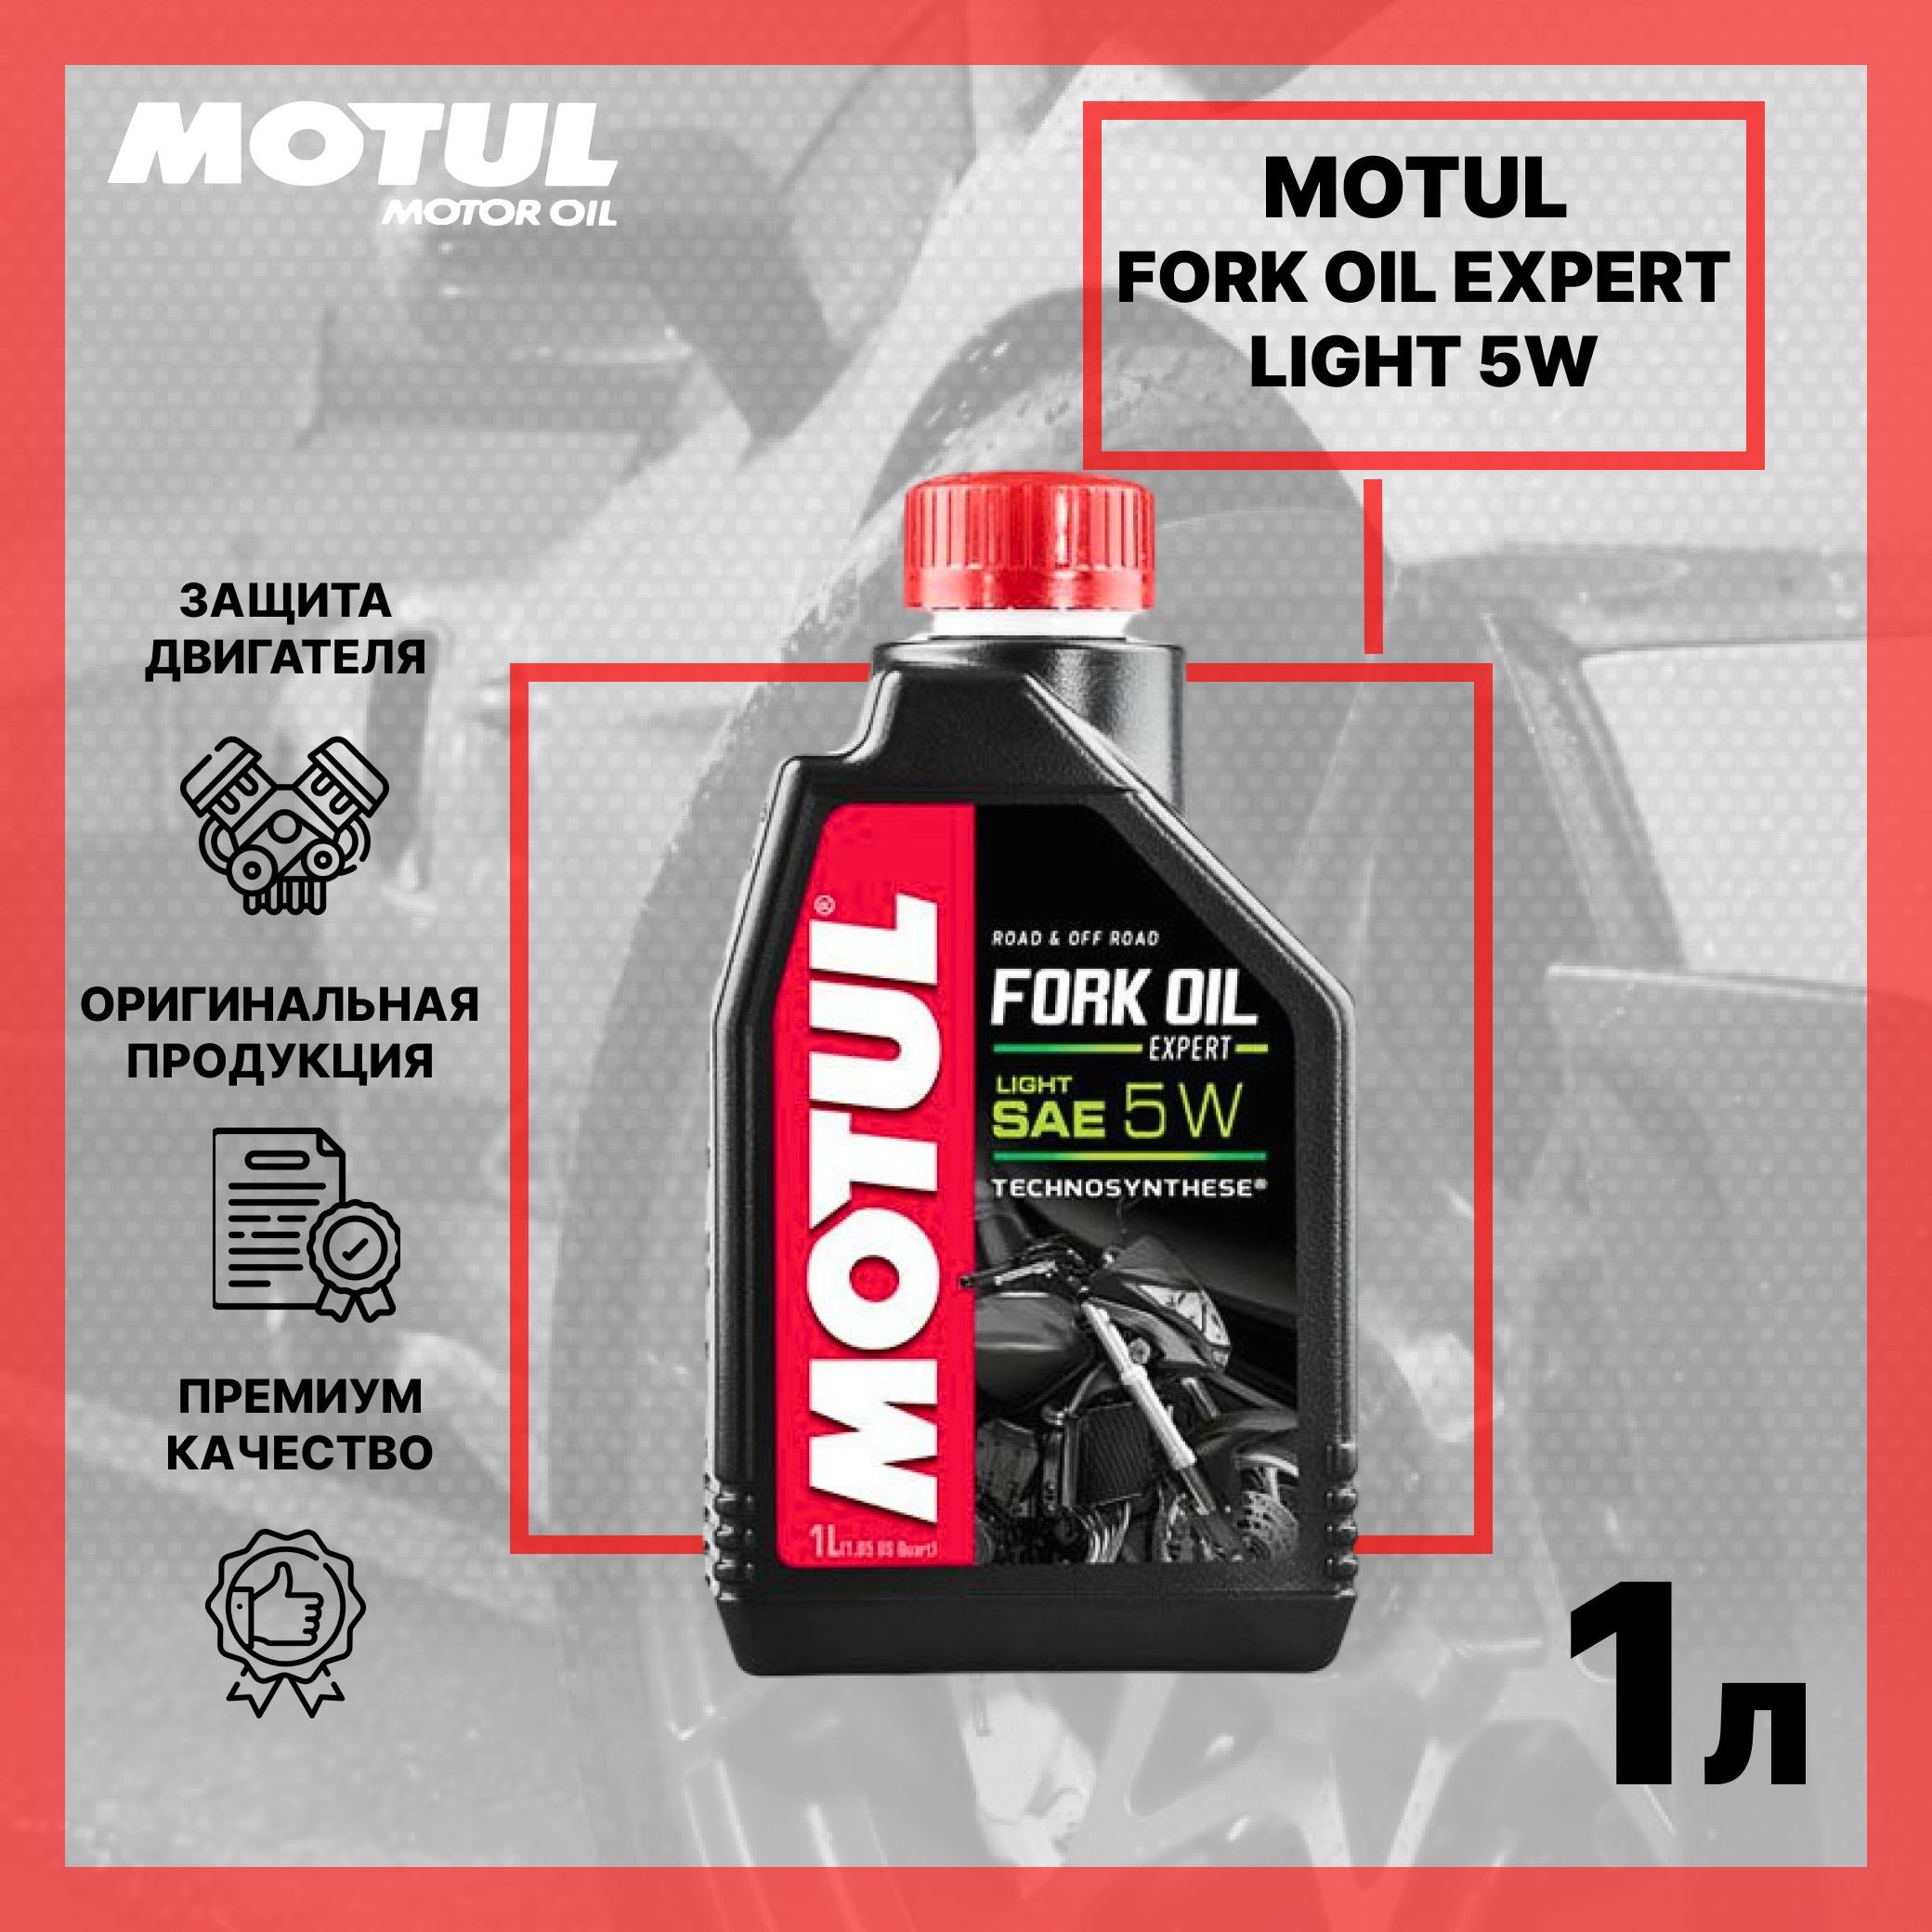 Motul fork Oil 5w. Вилочное масло для мотоцикла мотюль таблица вязкости. Motul fork Oil Exp l SAE. Fork Oil Factory line Light 5w куда заливаем.